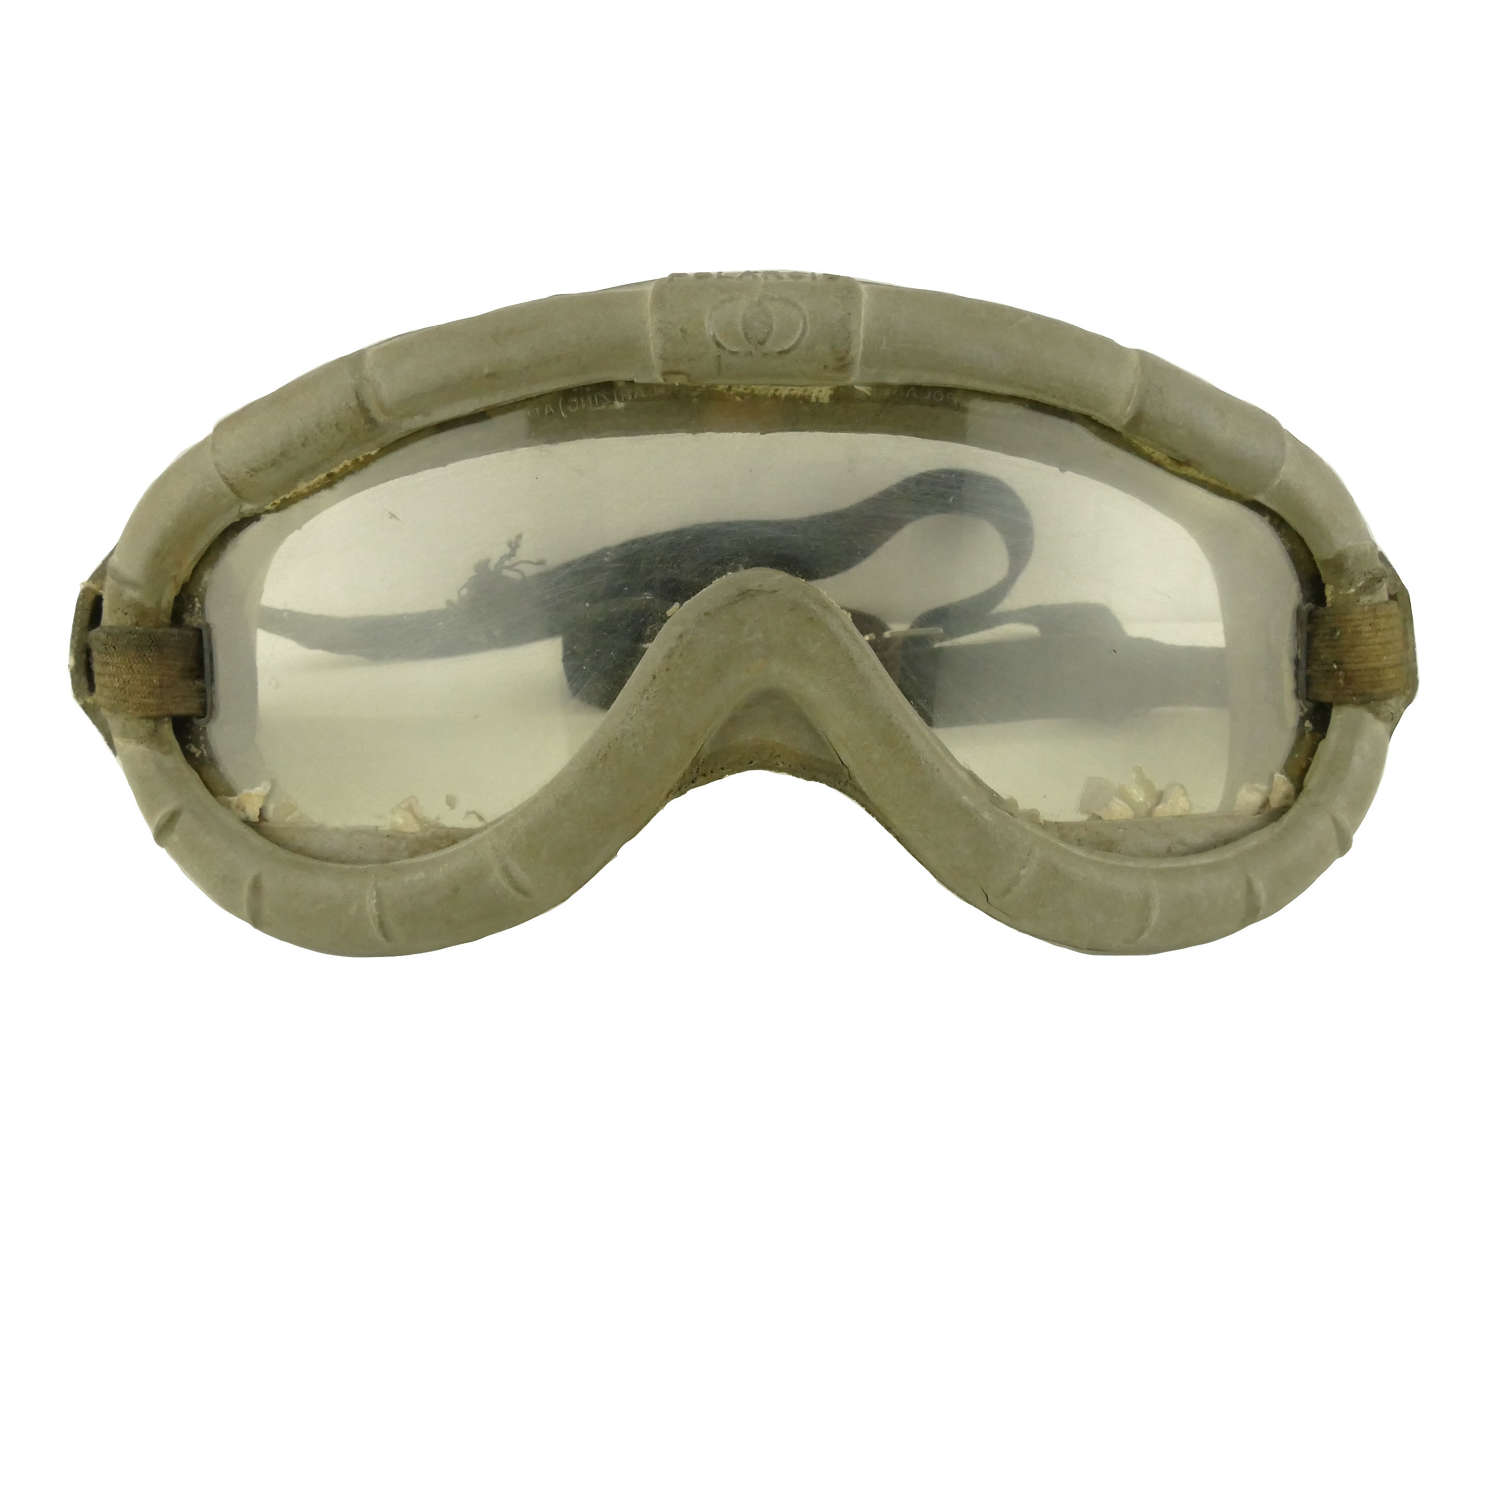 USAAF all purpose goggle